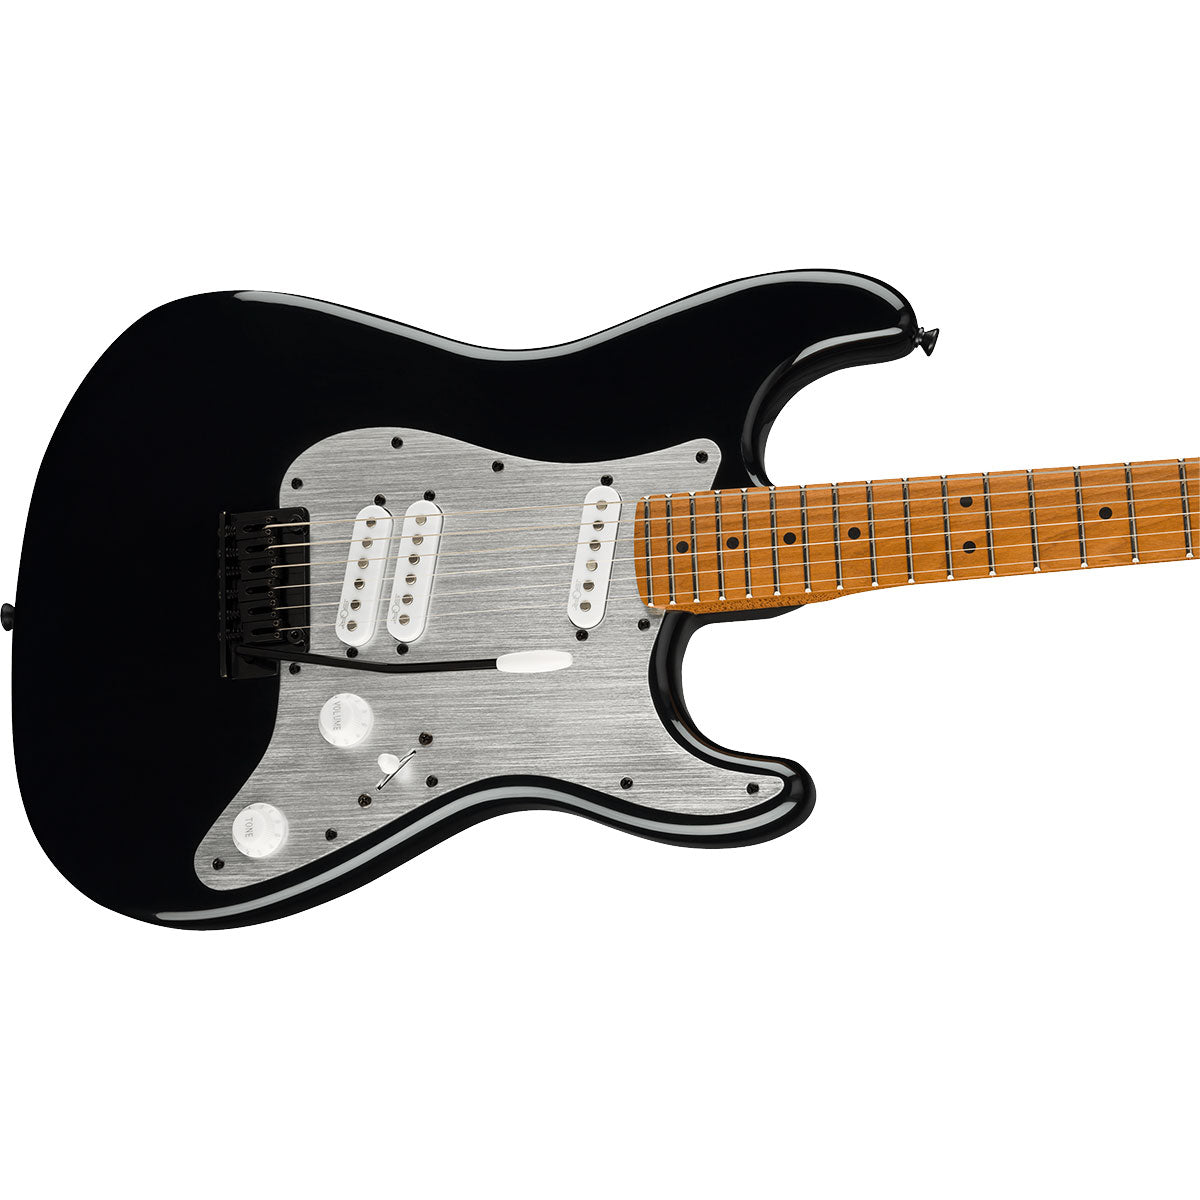 Squier Contemporary Stratocaster Special - Black View 4